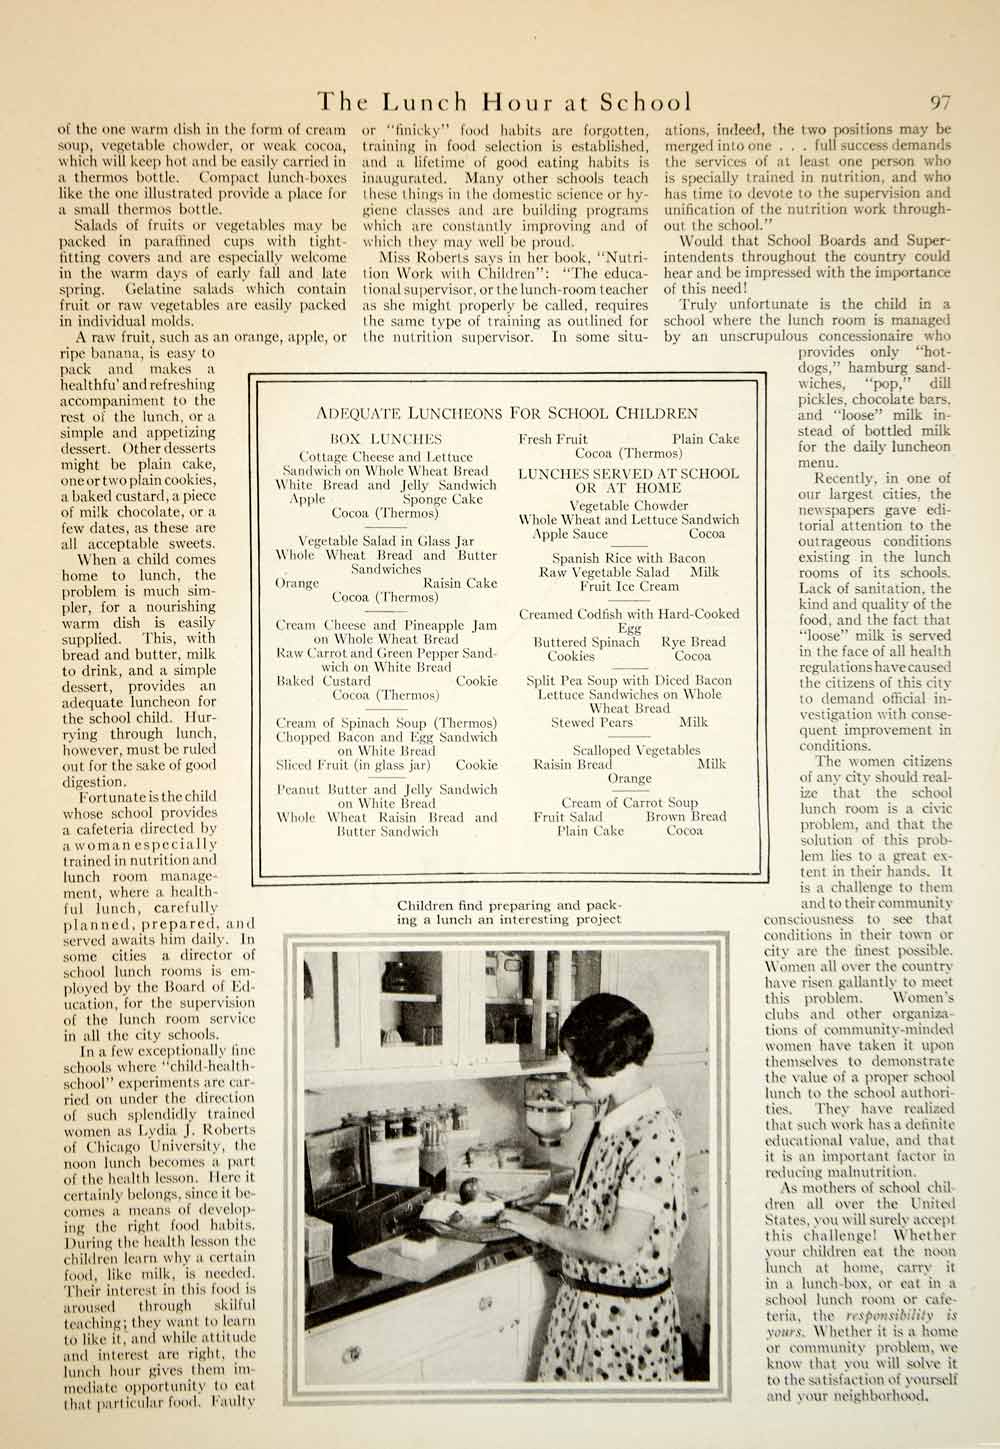 1929 Article Lunch Hour School Cafeteria Food Menus Women Demetria M Taylor YGH3